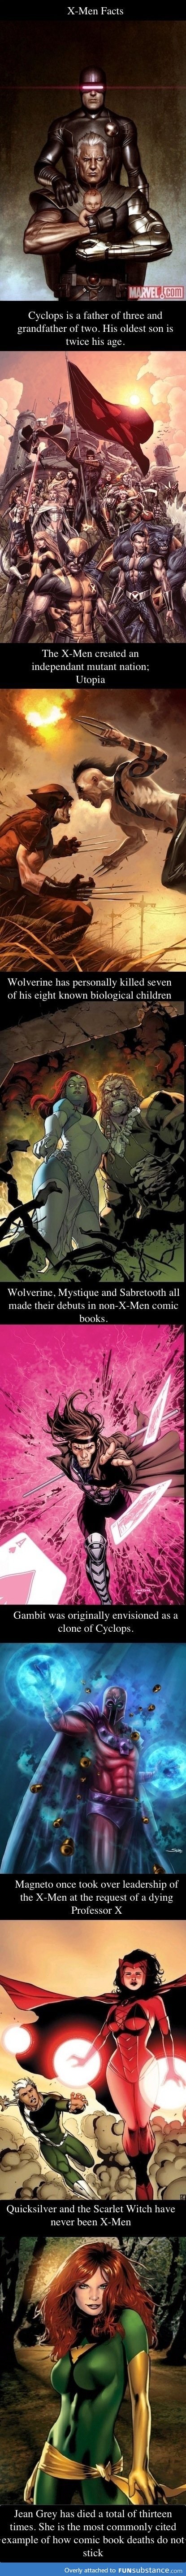 X-men facts compilation